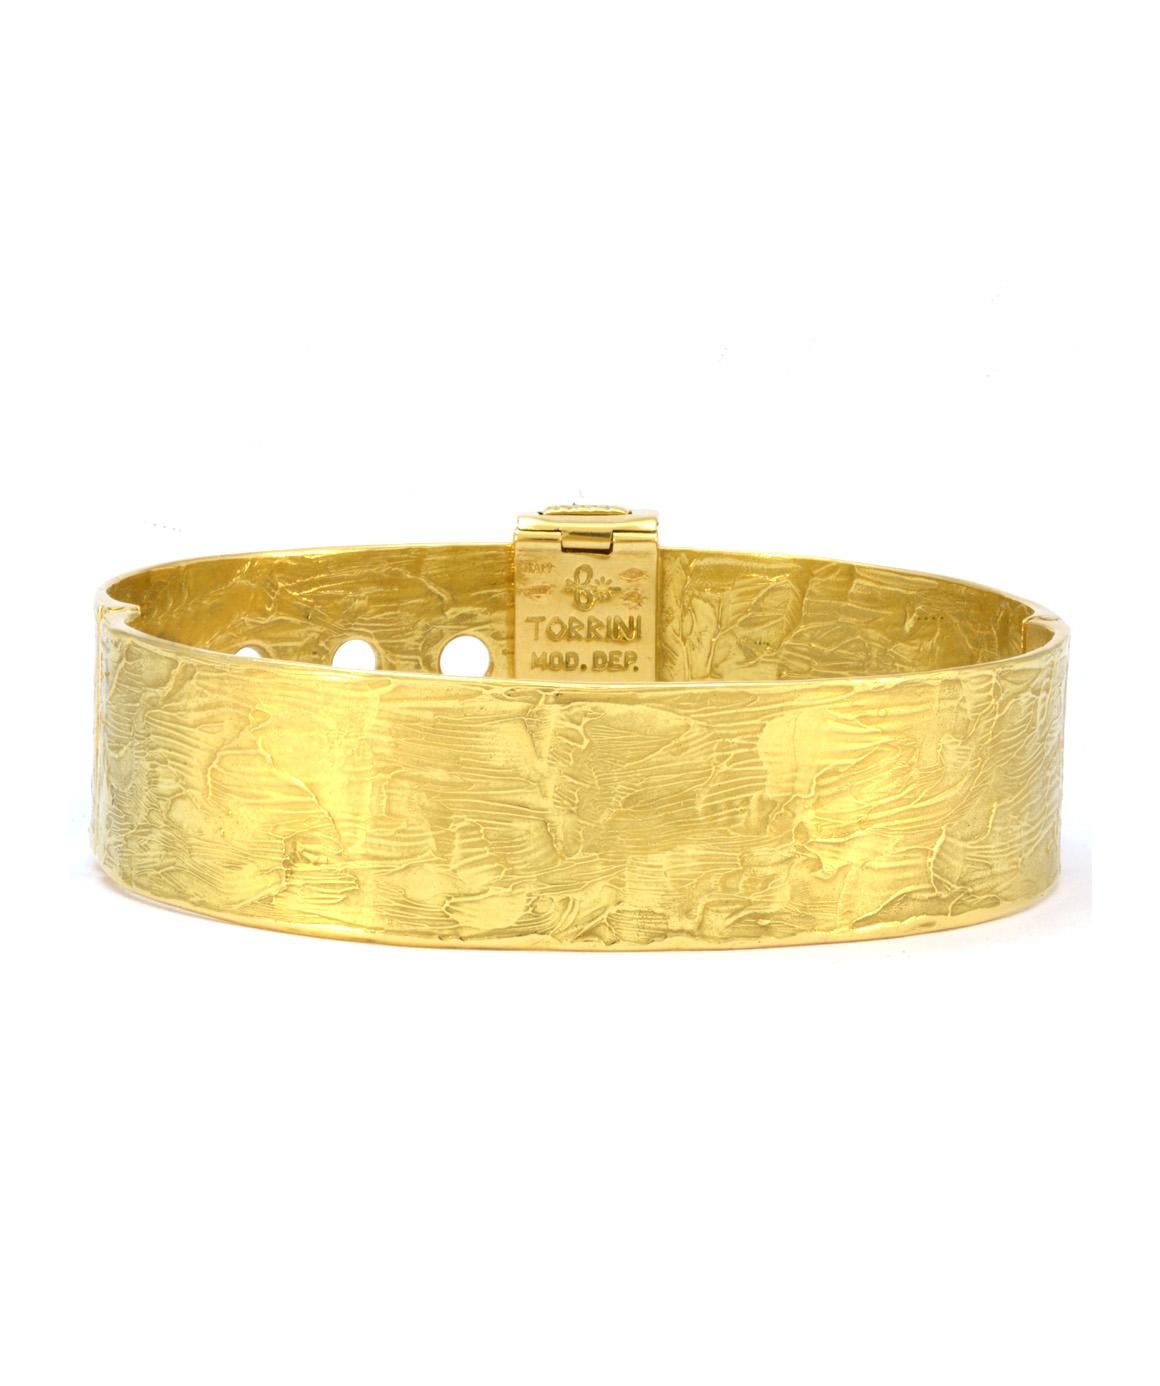 Round Cut 100% Authentic Zero by Torrini Solid 18 Karat Yellow Gold and Diamond Bracelet